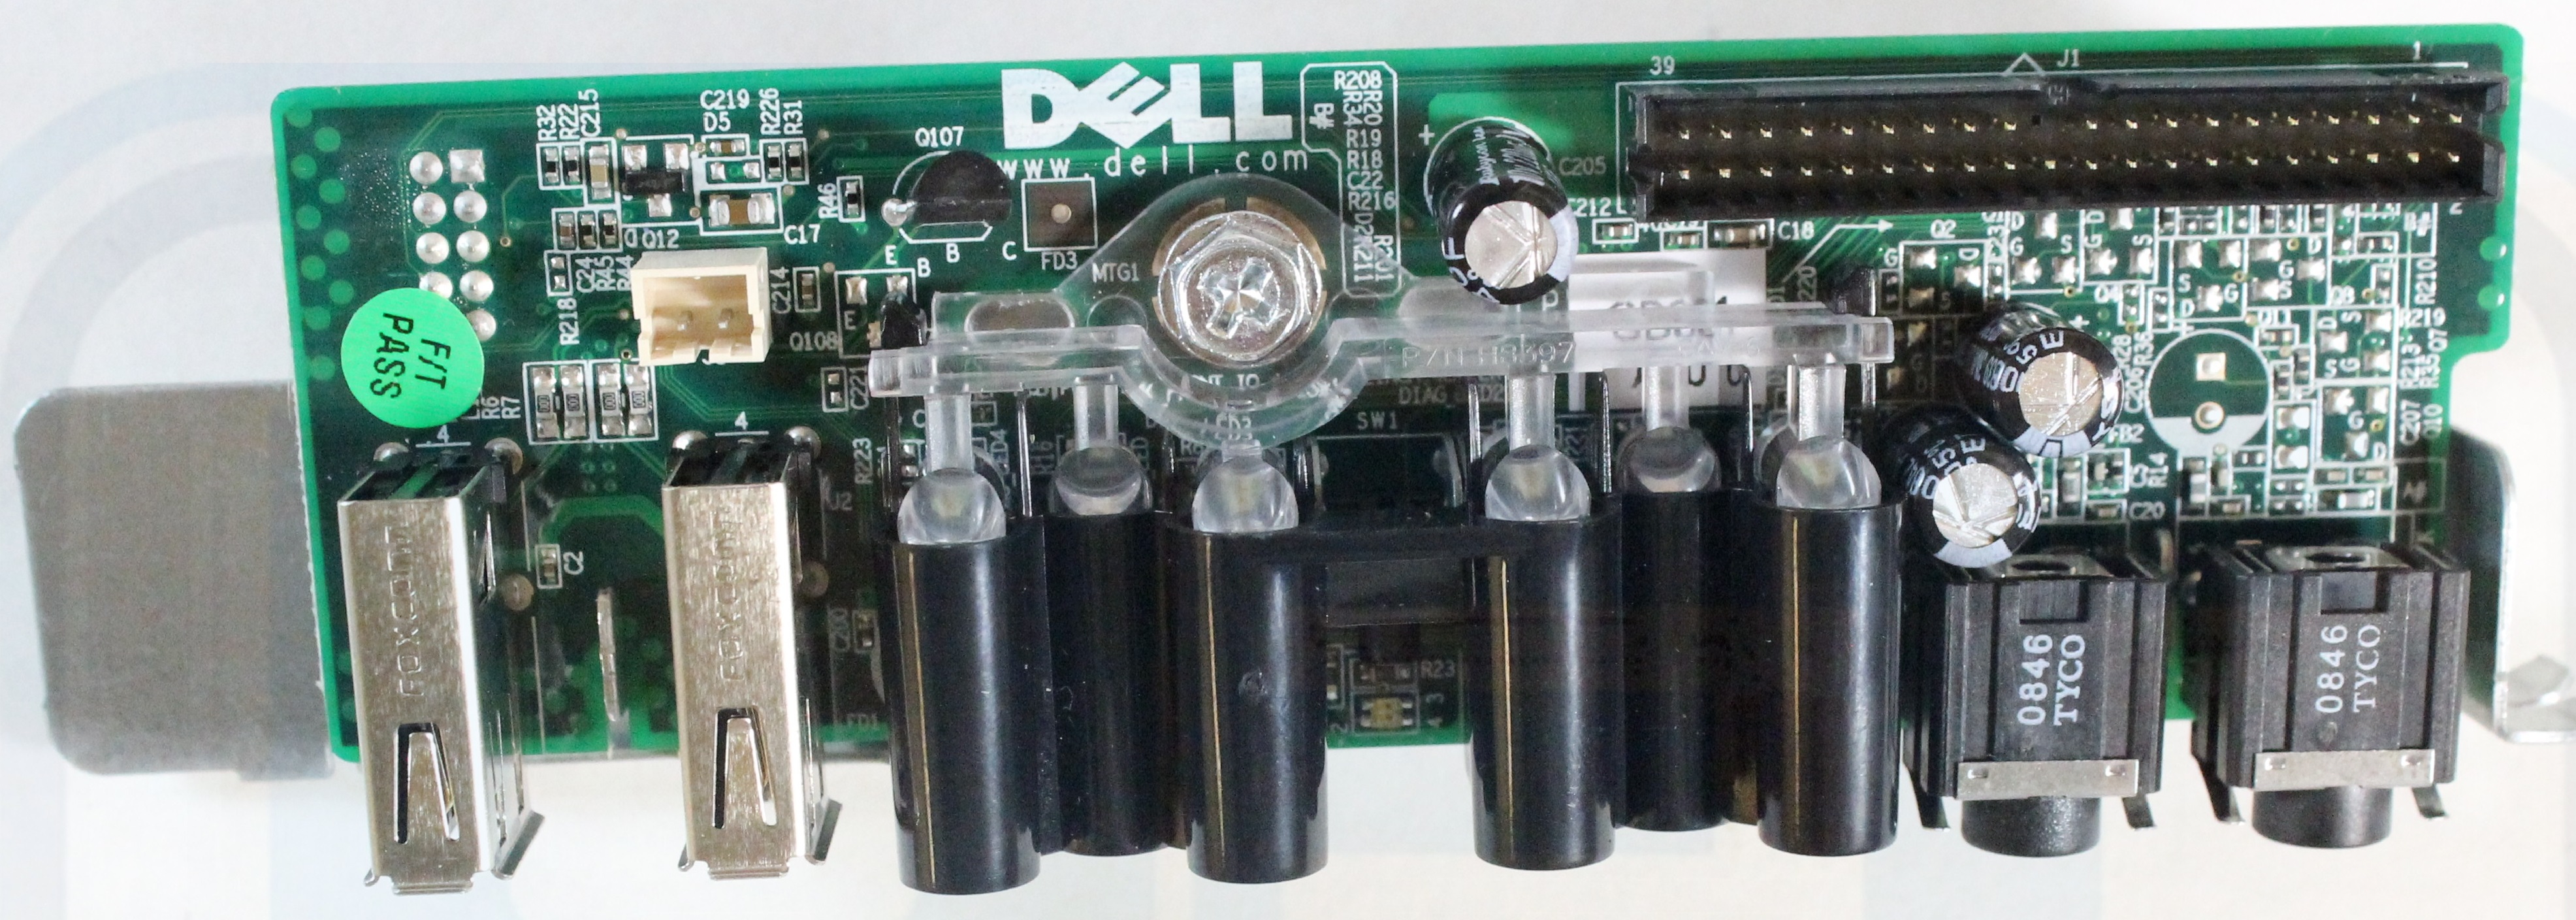 PC287 Dell Precision Workstation 490 Front I/O Panel Audio; USB